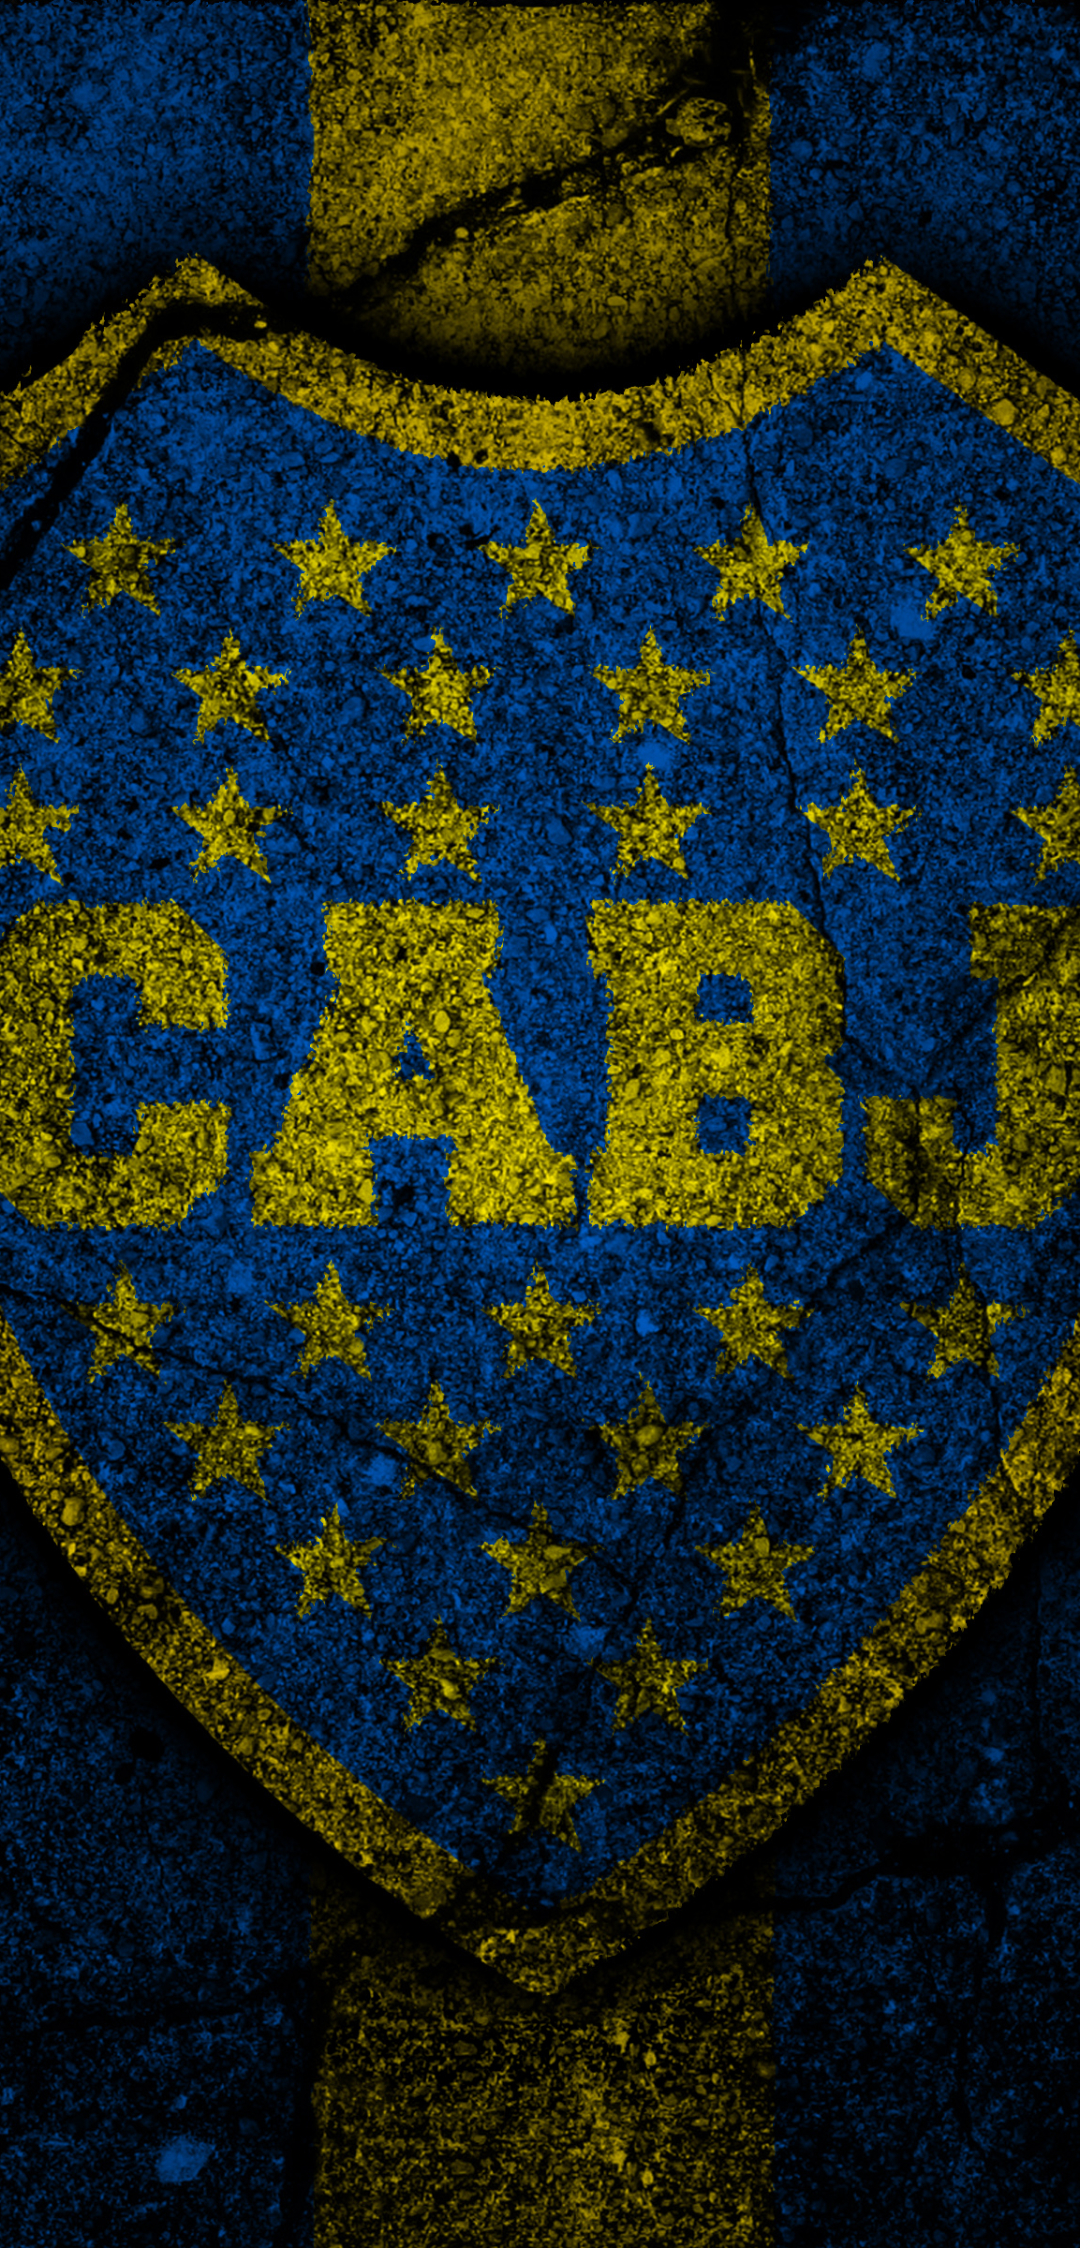 Descarga gratuita de fondo de pantalla para móvil de Fútbol, Logo, Emblema, Deporte, Boca Juniors.